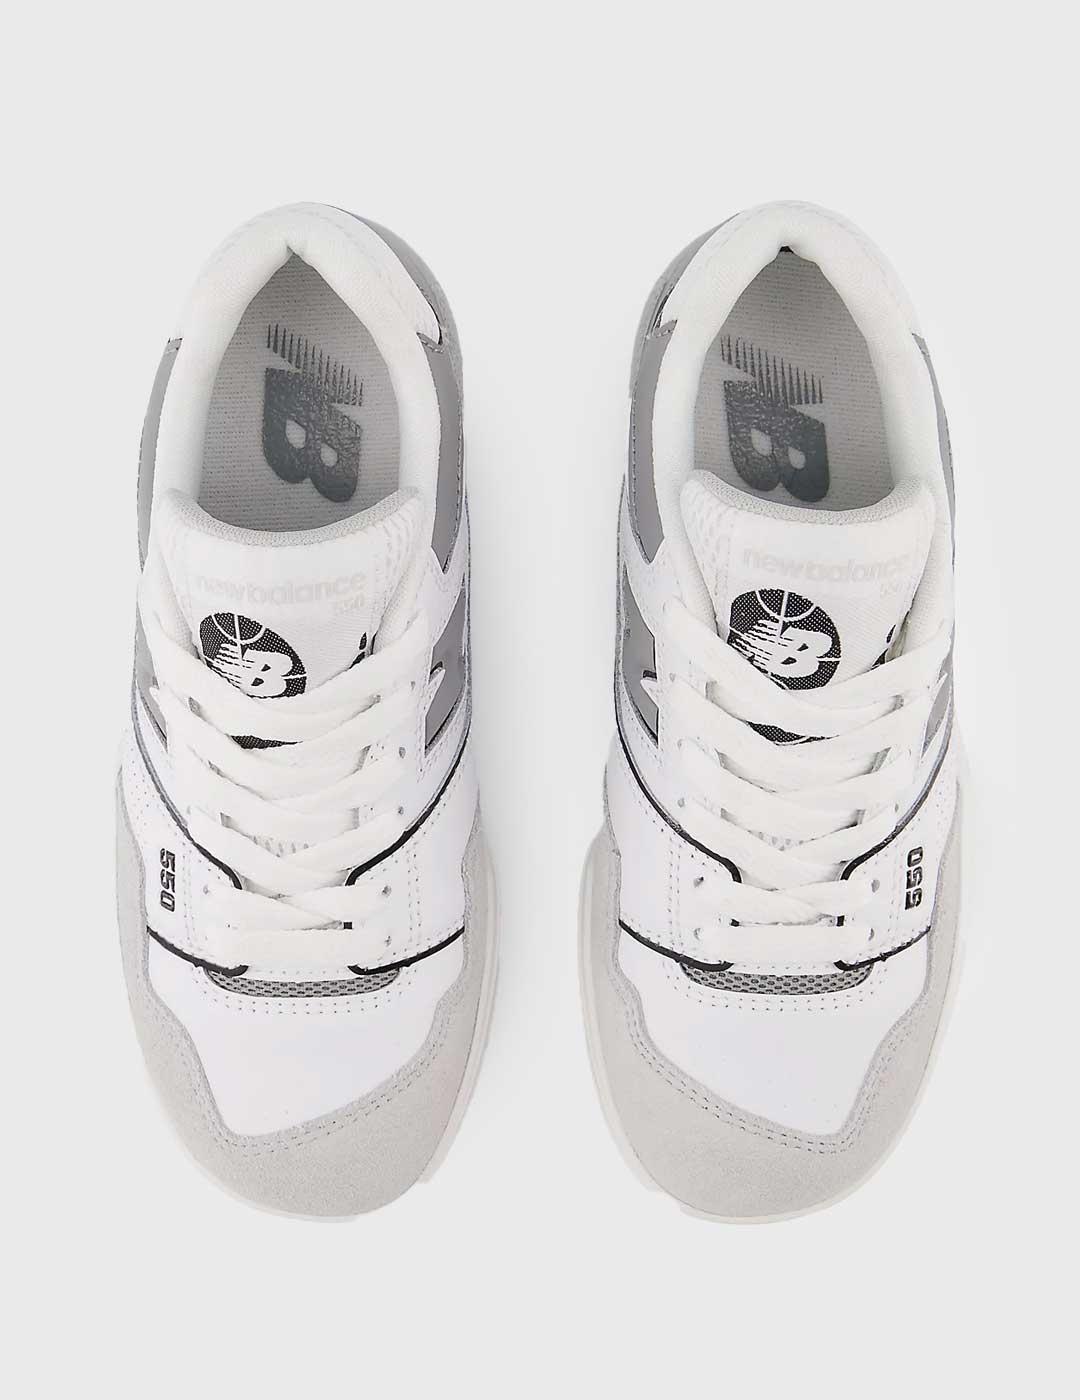 New Balance 550 Zapatillas infantiles grises y blancas